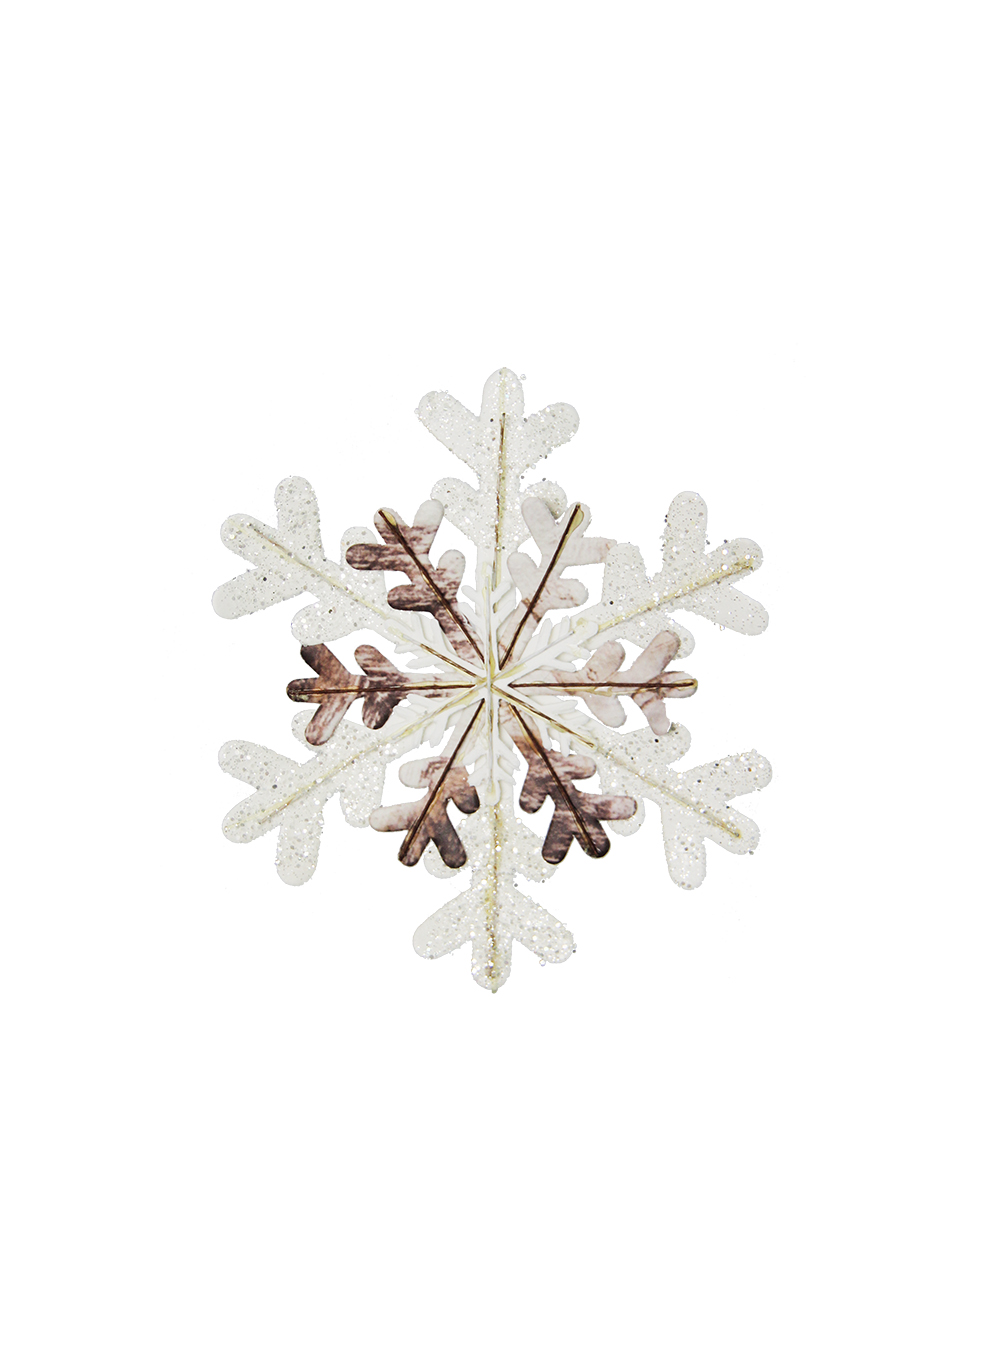 Hanging White Snowflake (Pollyanna)